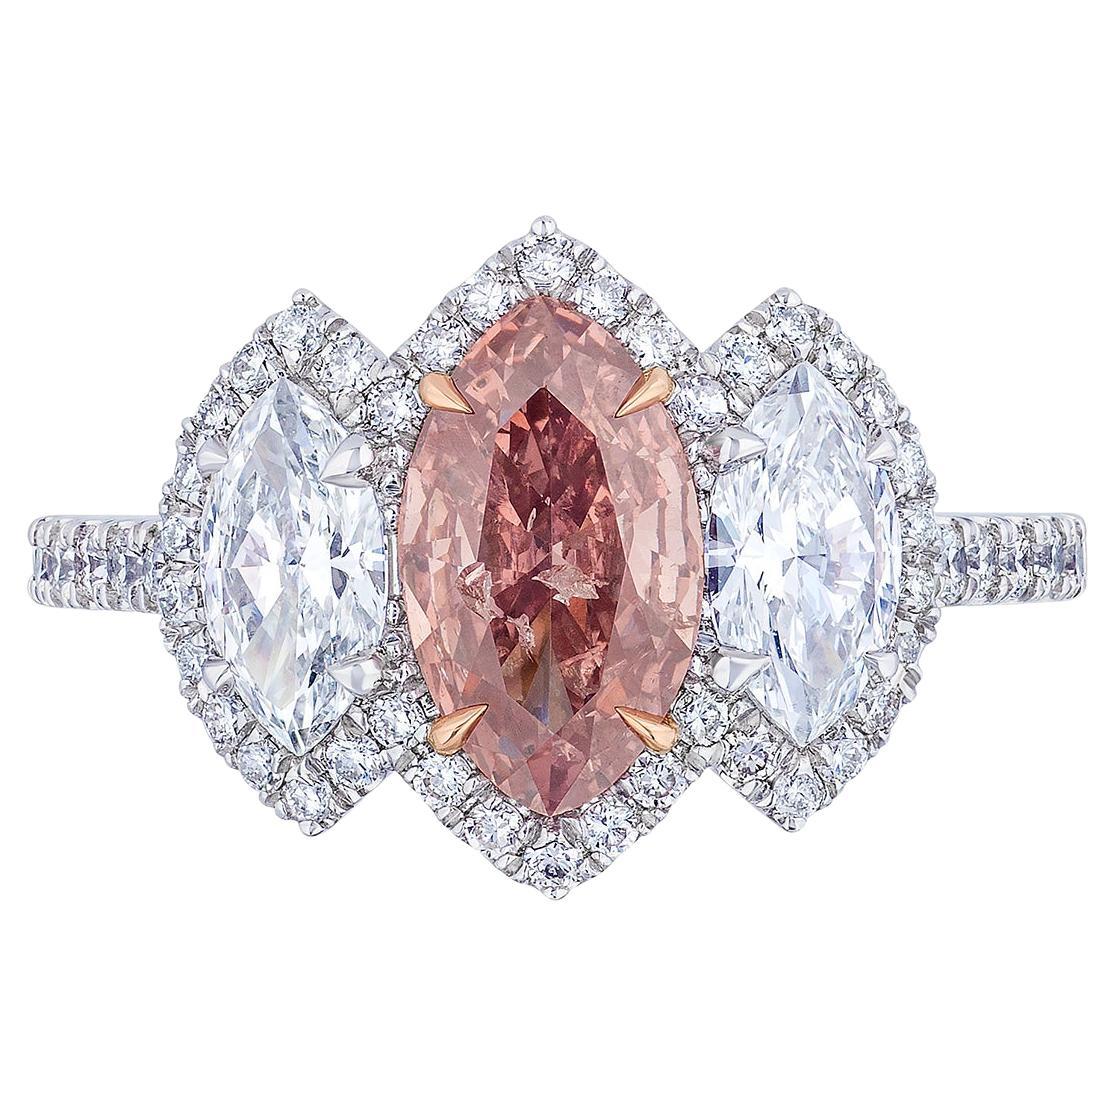 GIA Certified 1.01 Carat Marquise Shaped Pink Diamond Ring